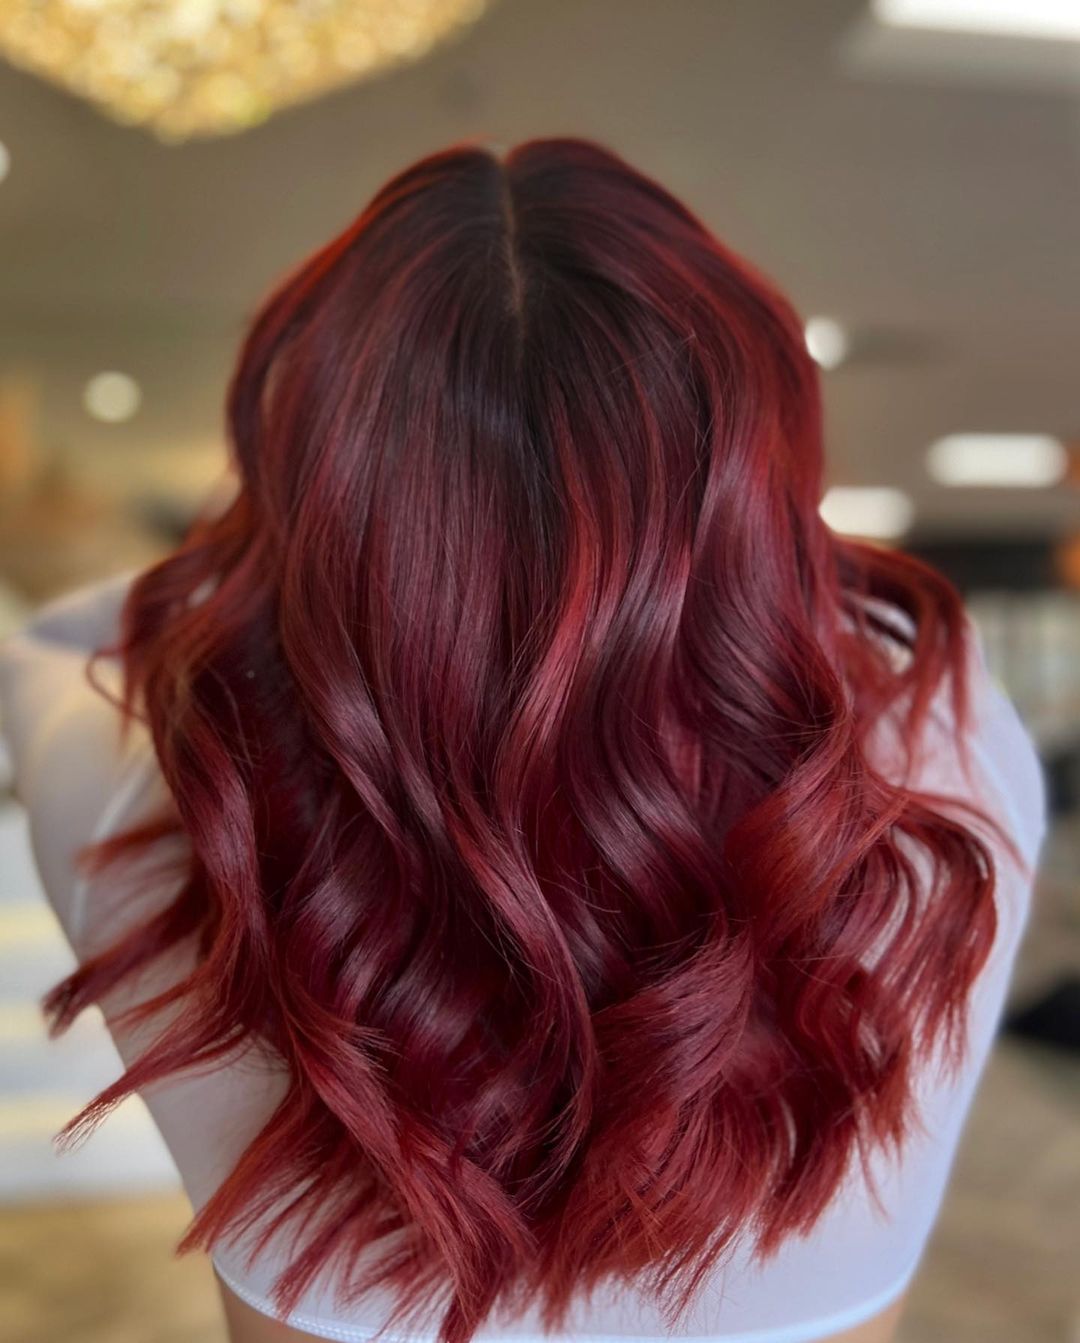 pelo rojo cereza medio